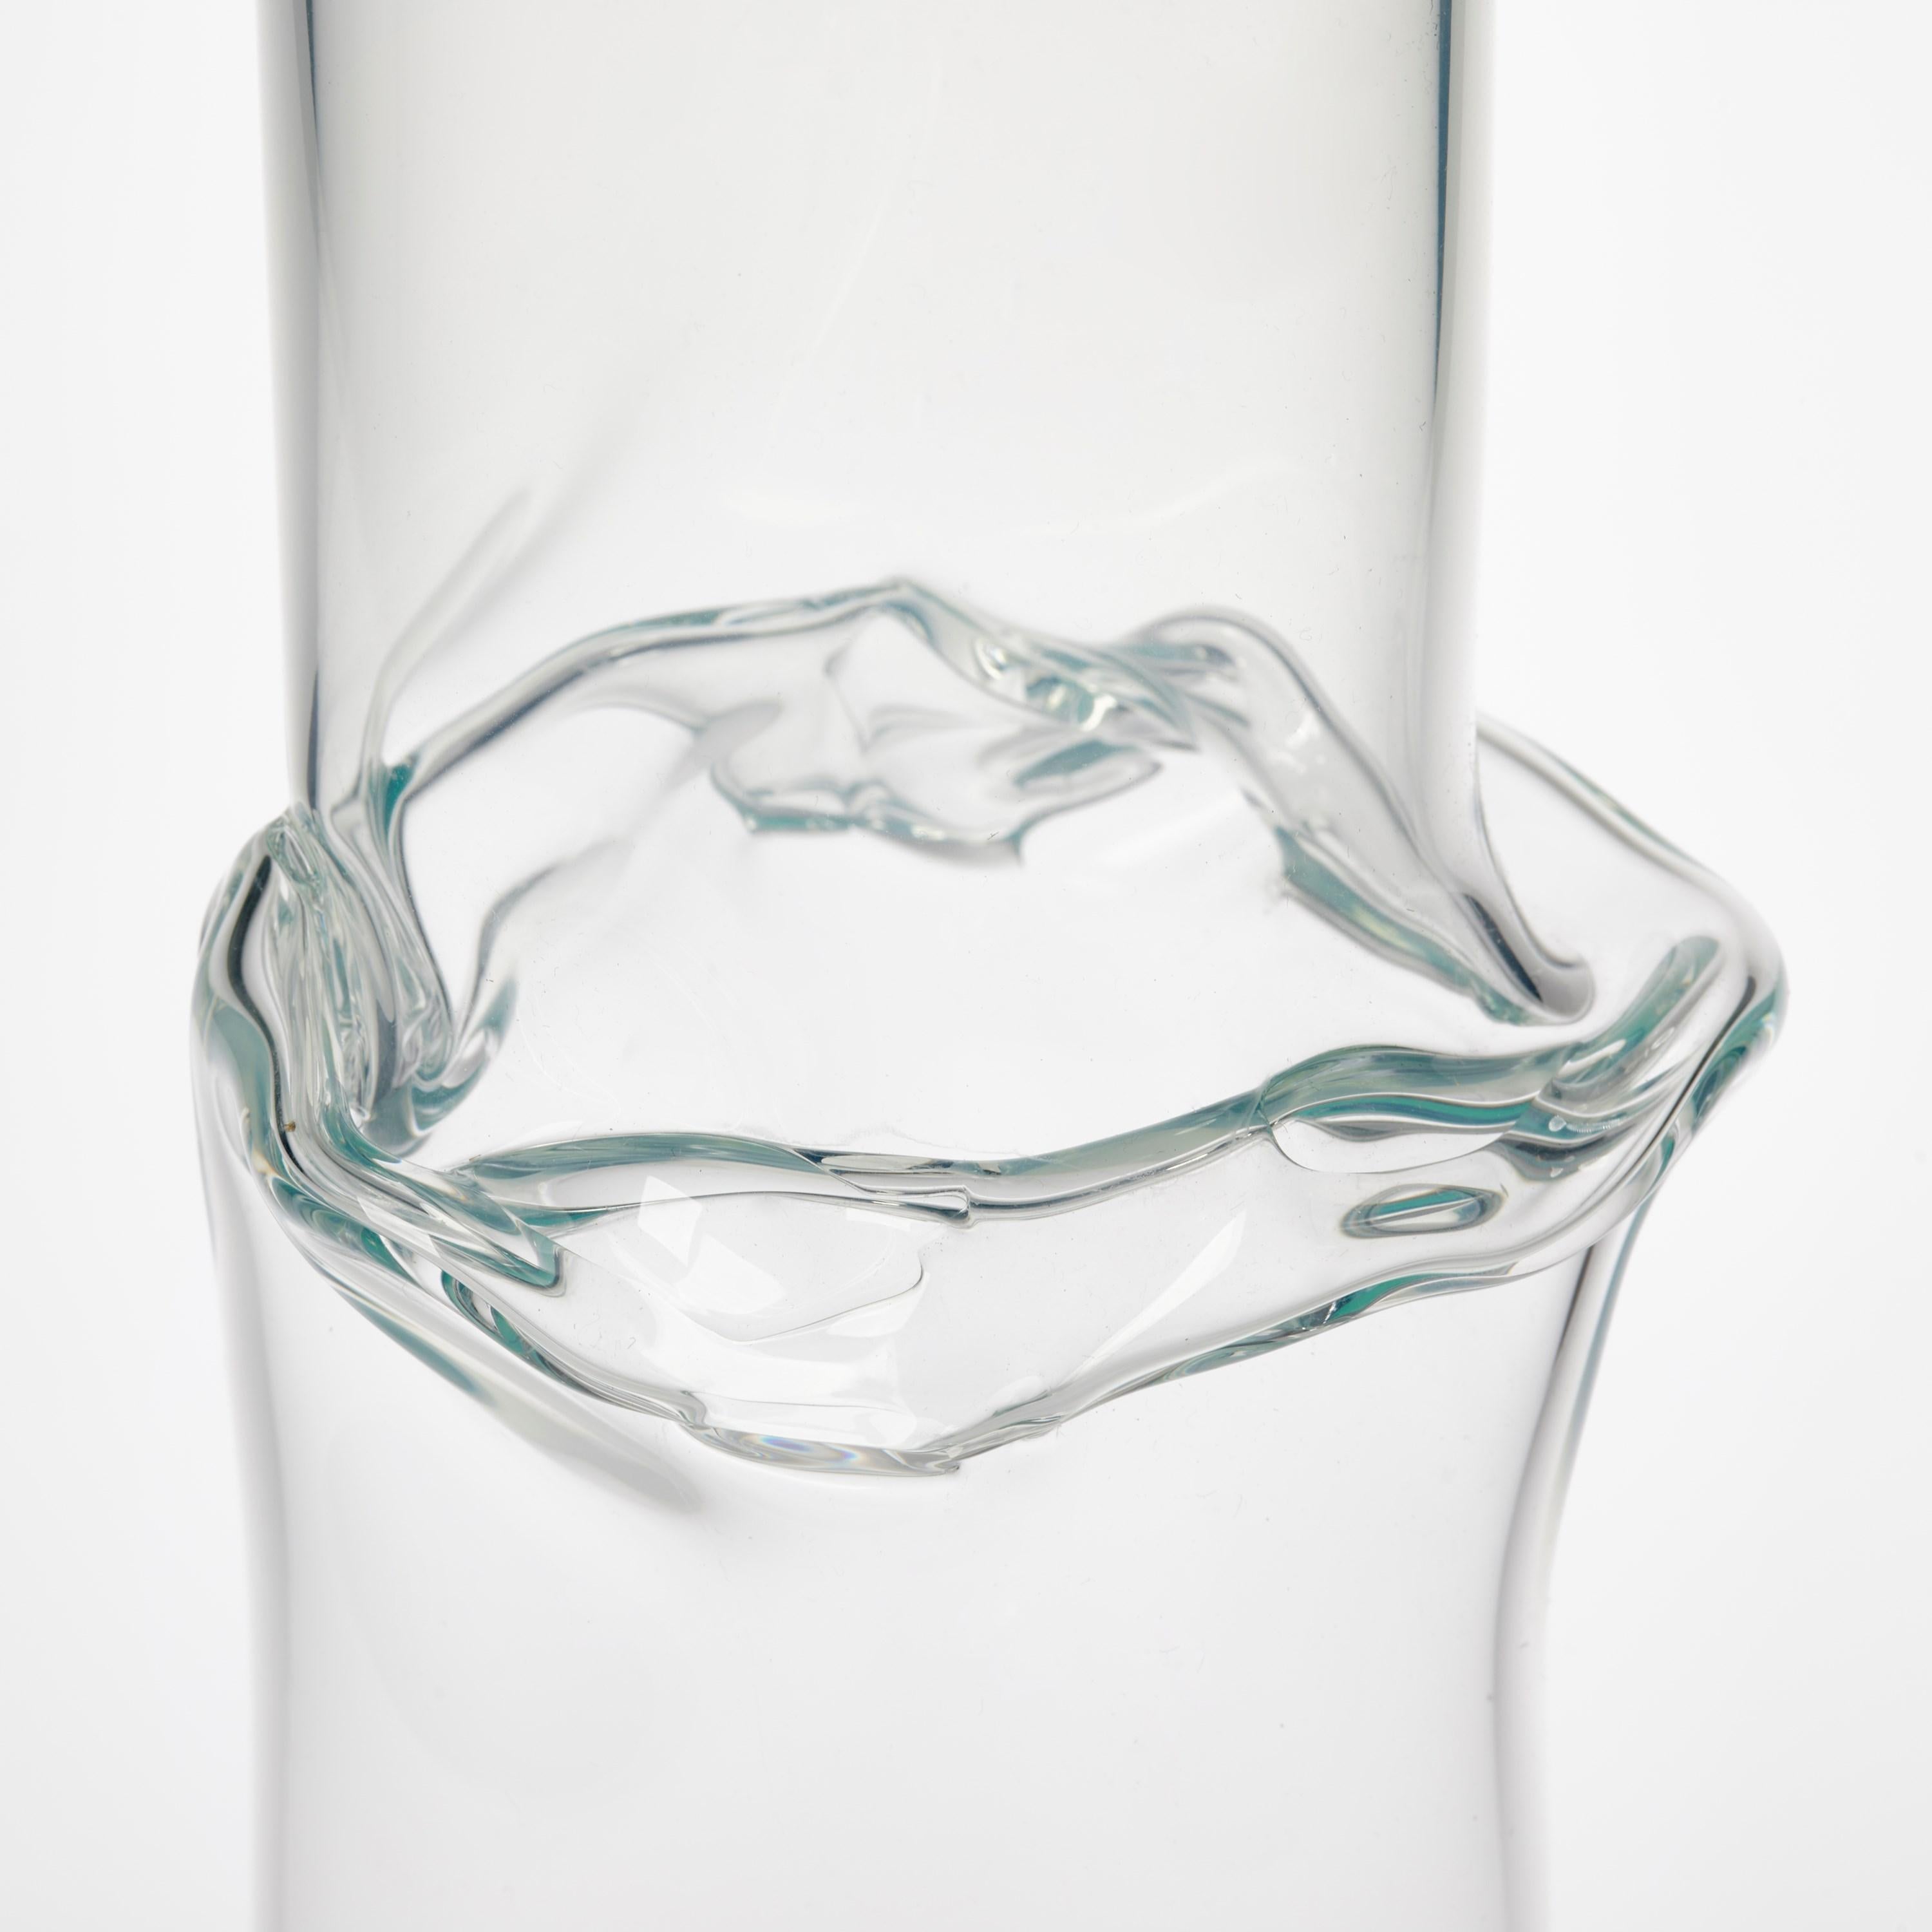 Organic Modern Torsion in Ocean Blue 22/01, clear & jade sculptural glass vessel by Emma Baker For Sale